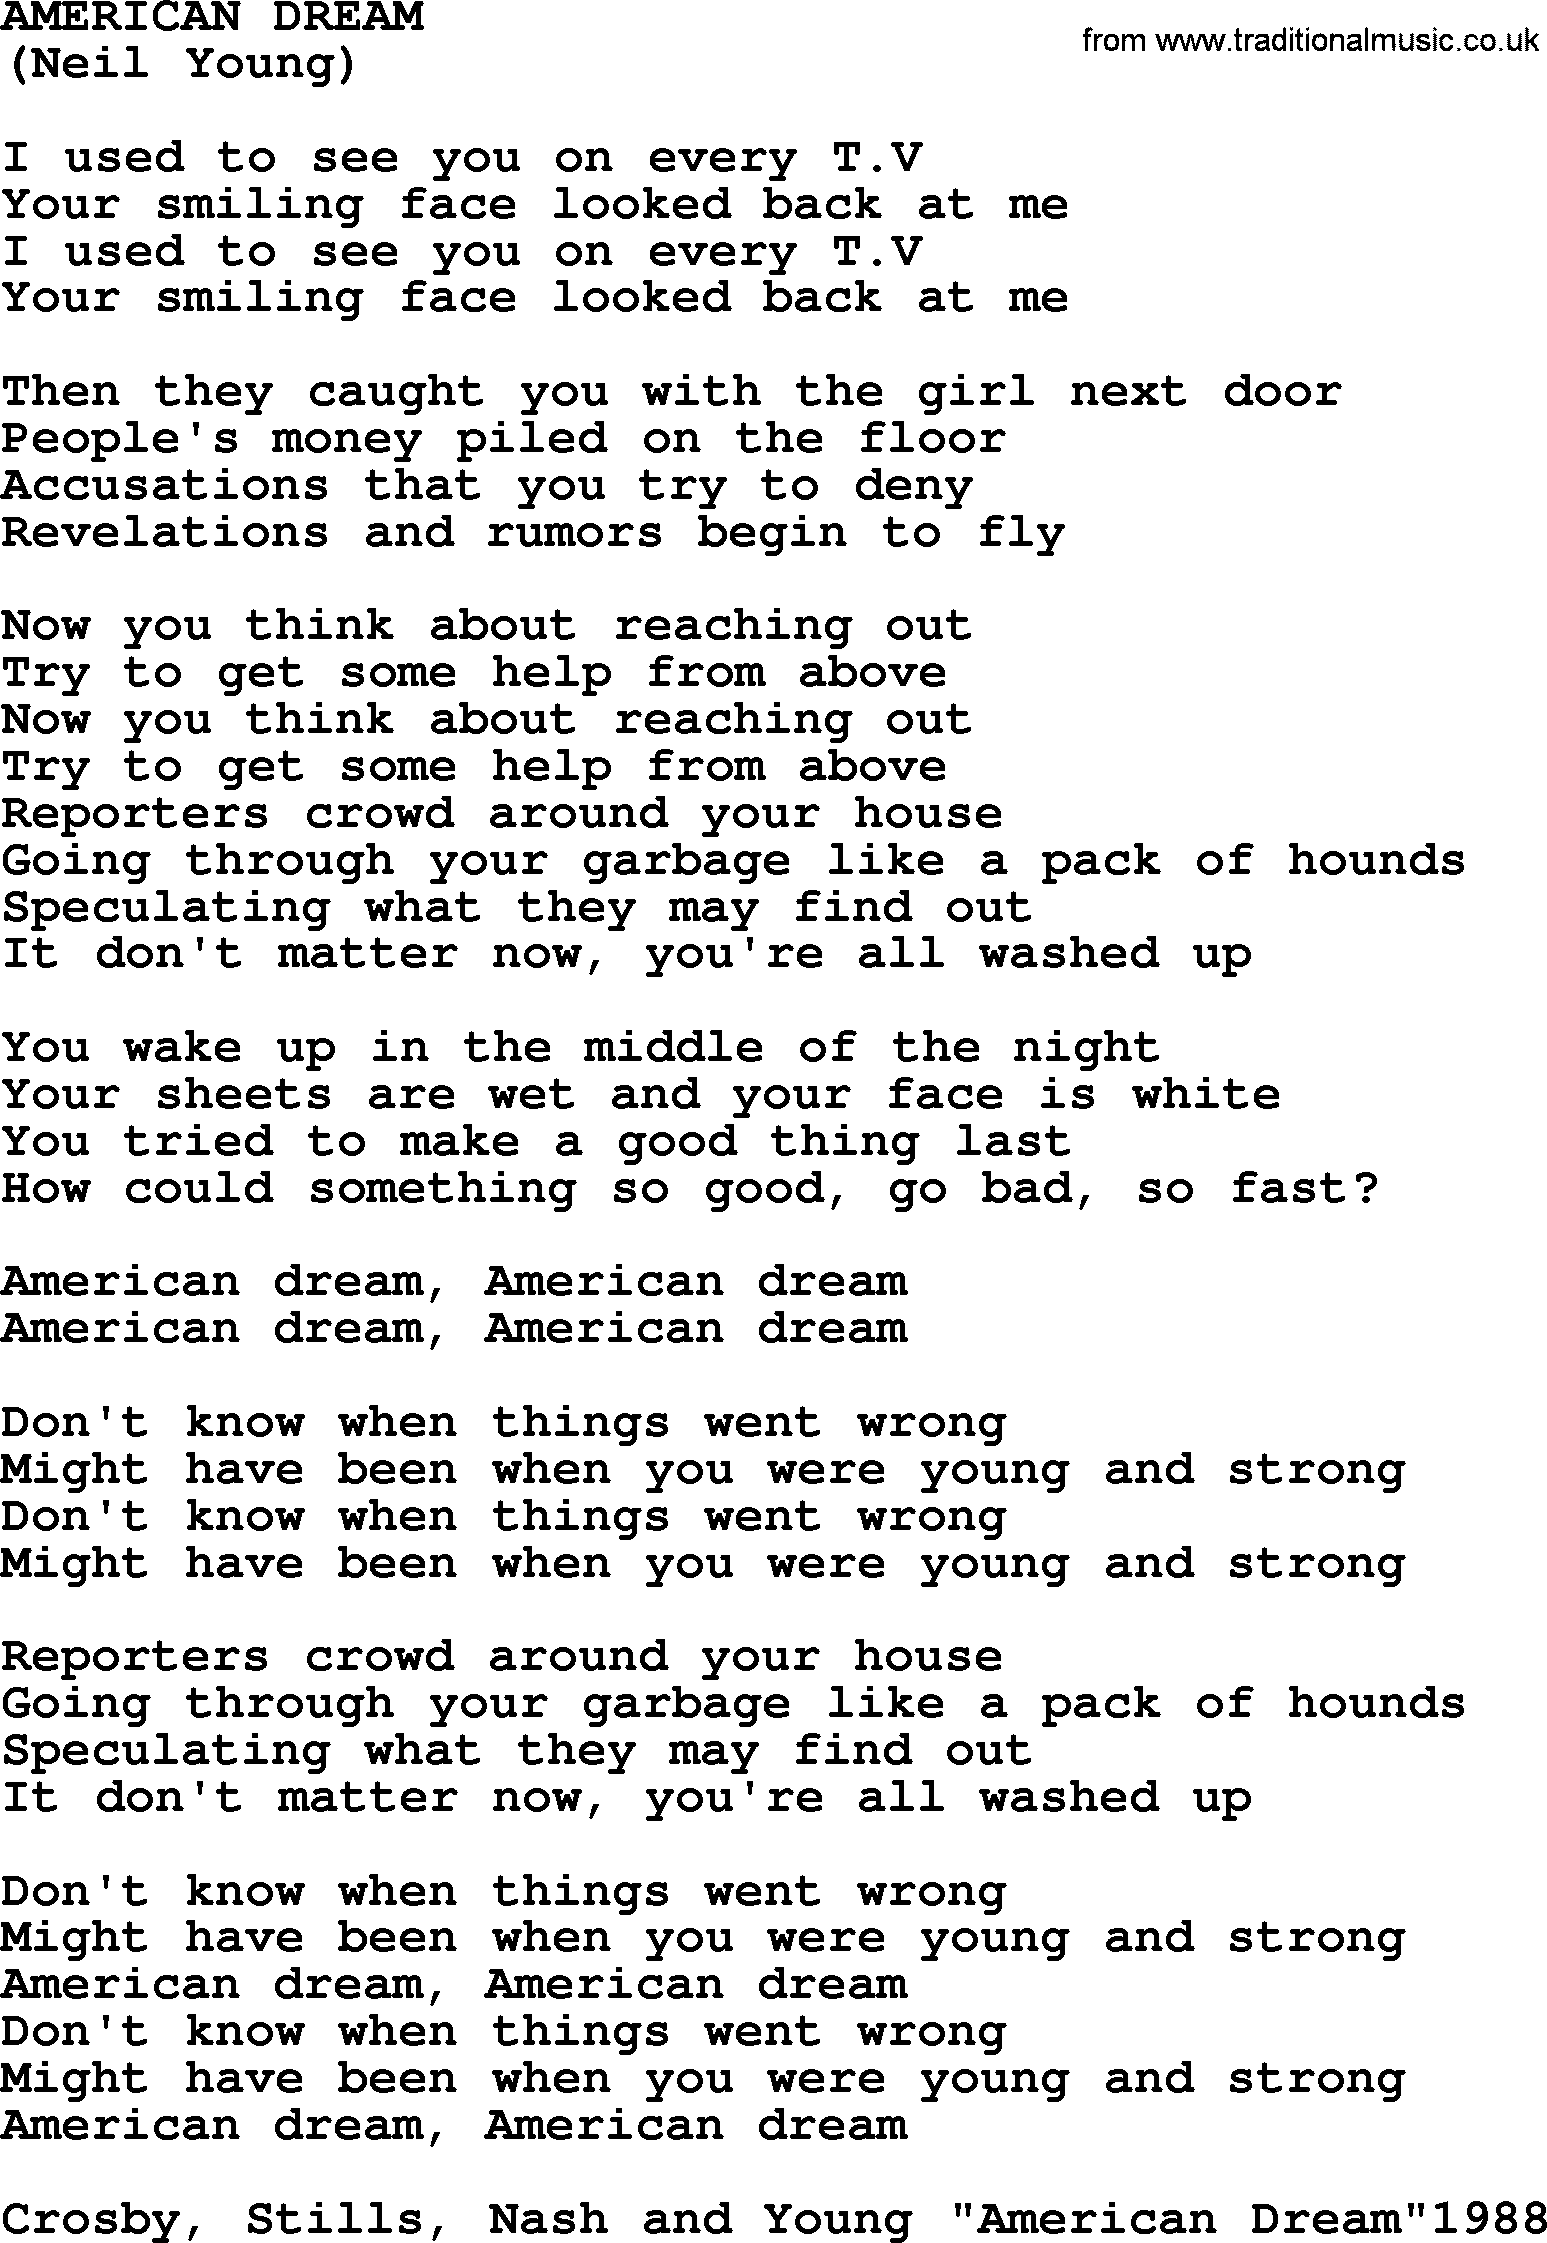 The Byrds song American Dream, lyrics